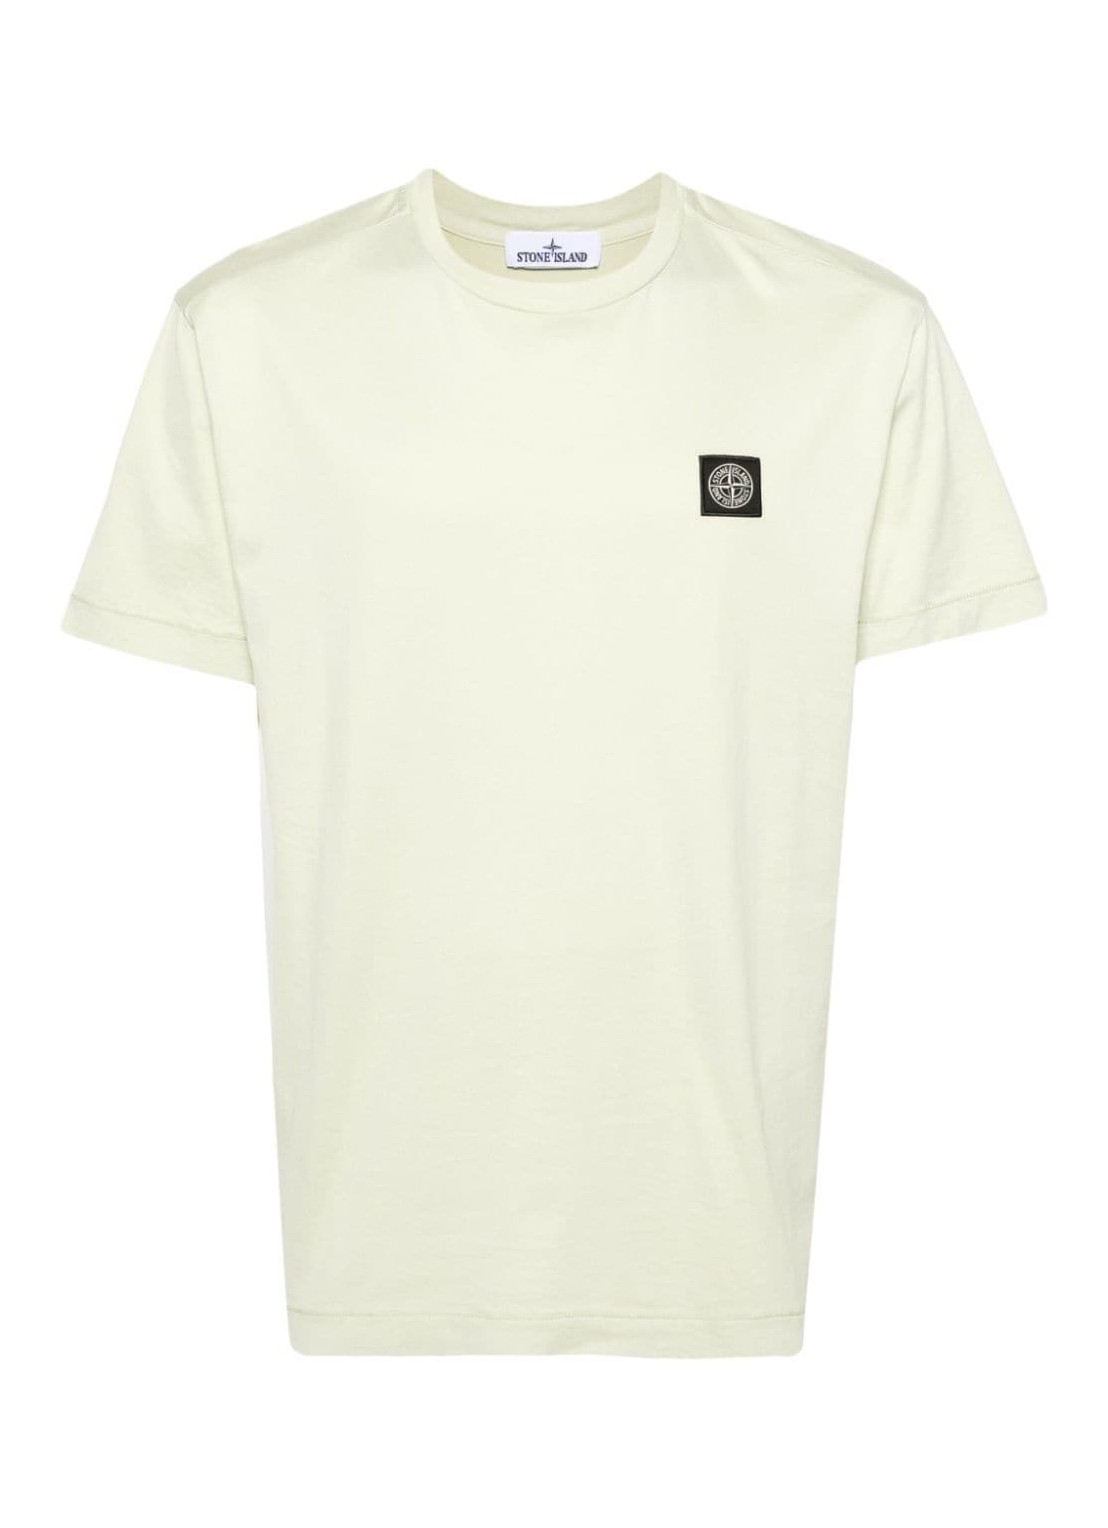 Camiseta stone island t-shirt man t shirt 801524113 v0051 talla XXL
 